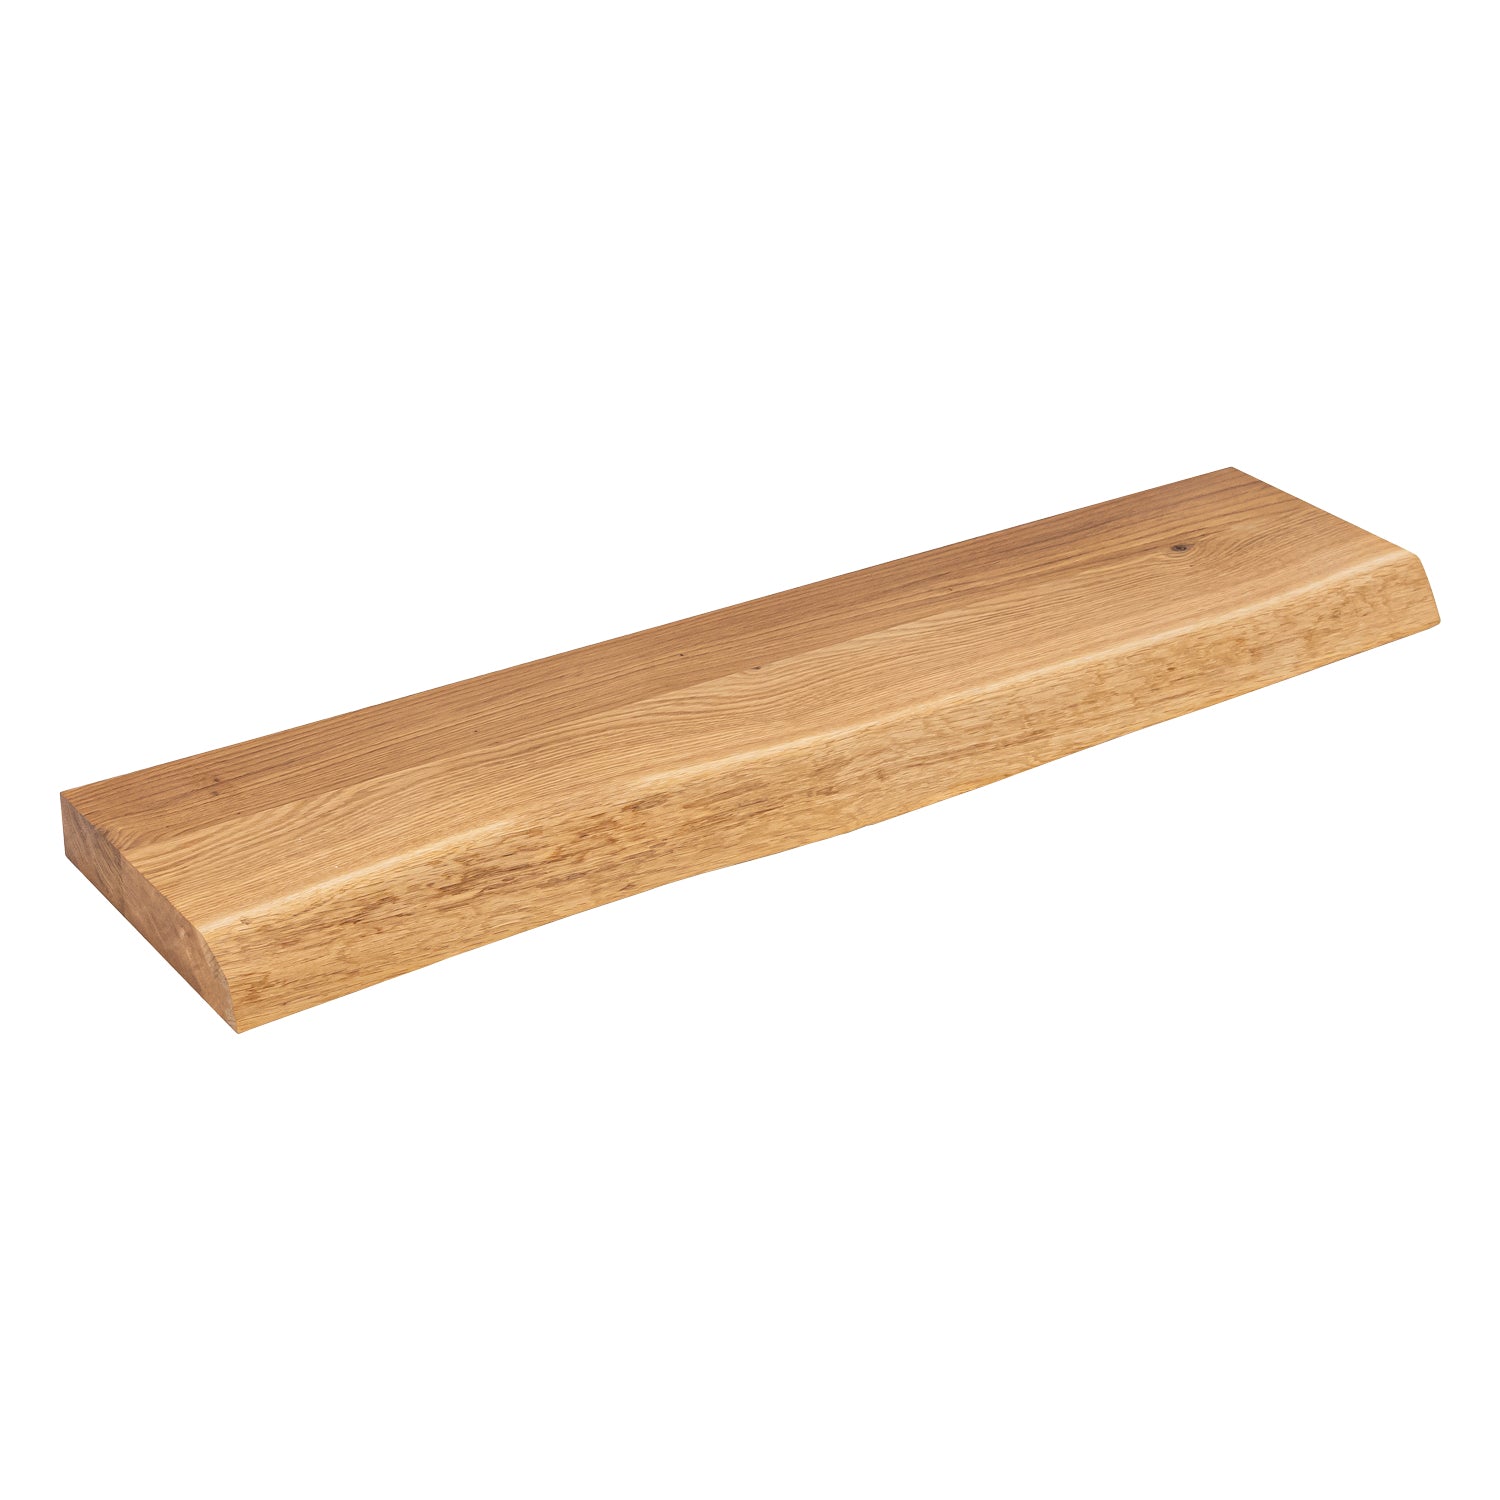 Solid Oak Live Edge Shelf - 40mm thick